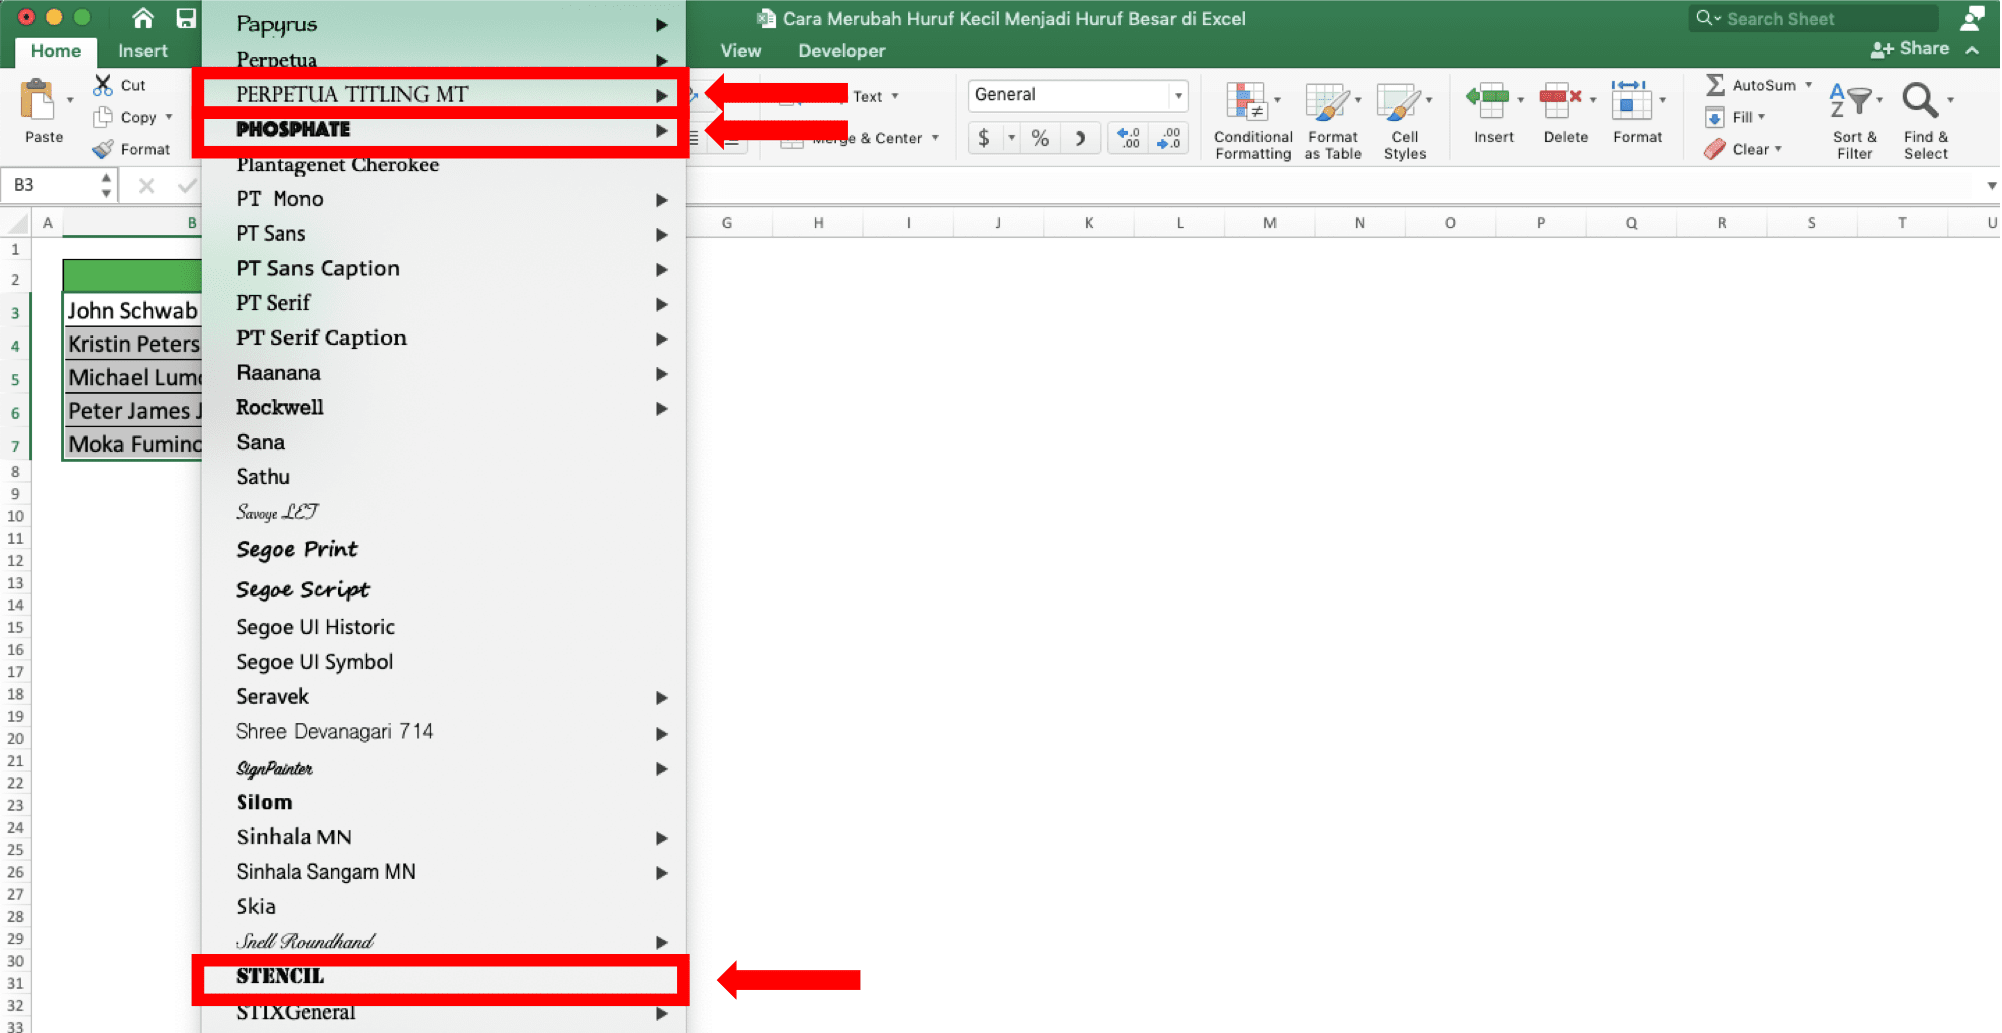 Cara Merubah Huruf Kecil Menjadi Huruf Besar di Excel - Screenshot Contoh Jenis Font Dengan Huruf Besar Semua